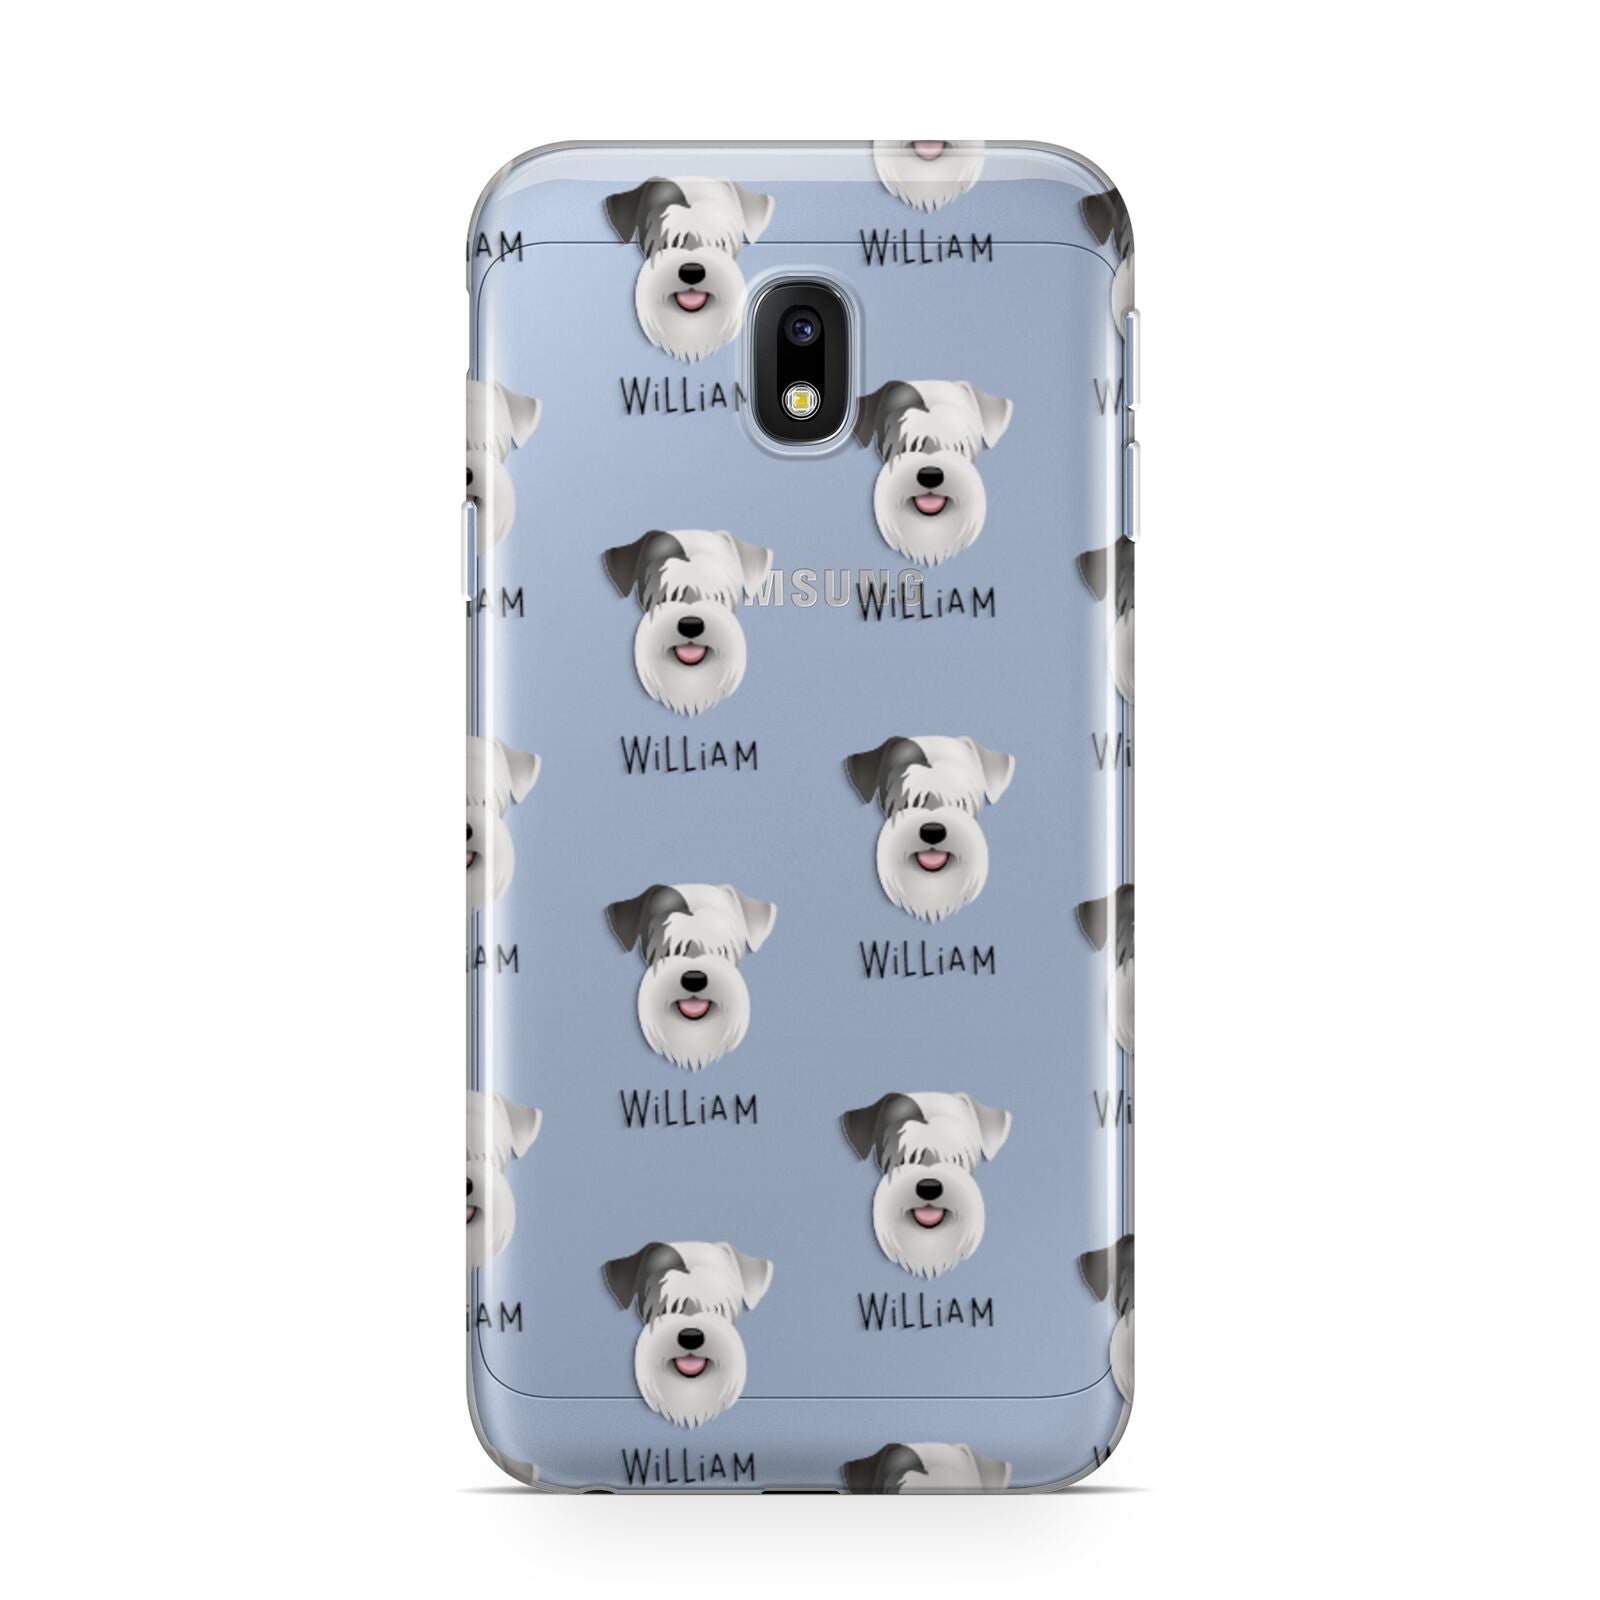 Sealyham Terrier Icon with Name Samsung Galaxy J3 2017 Case